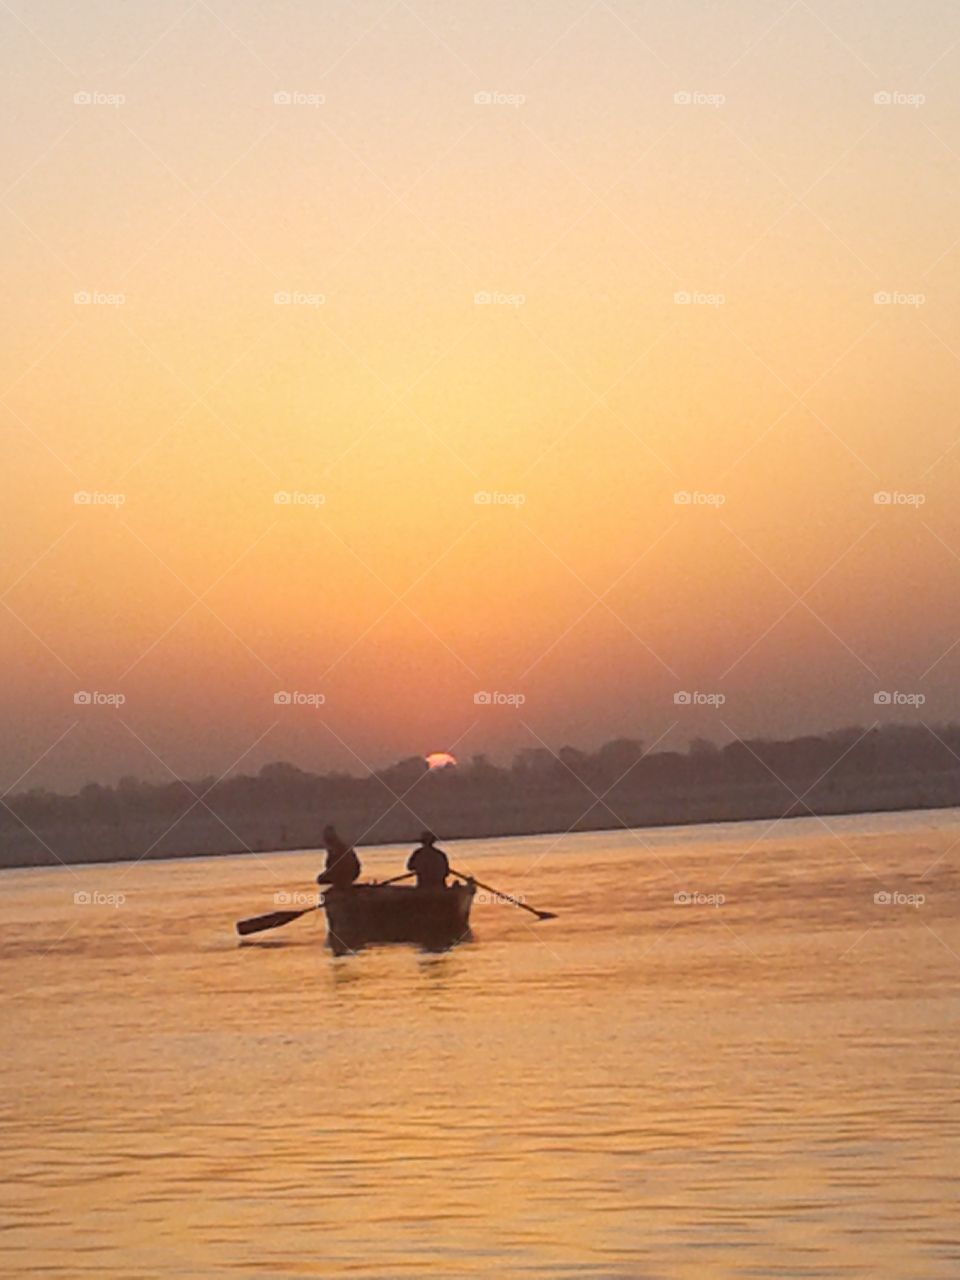 Sunrise over the Ganges 🌞